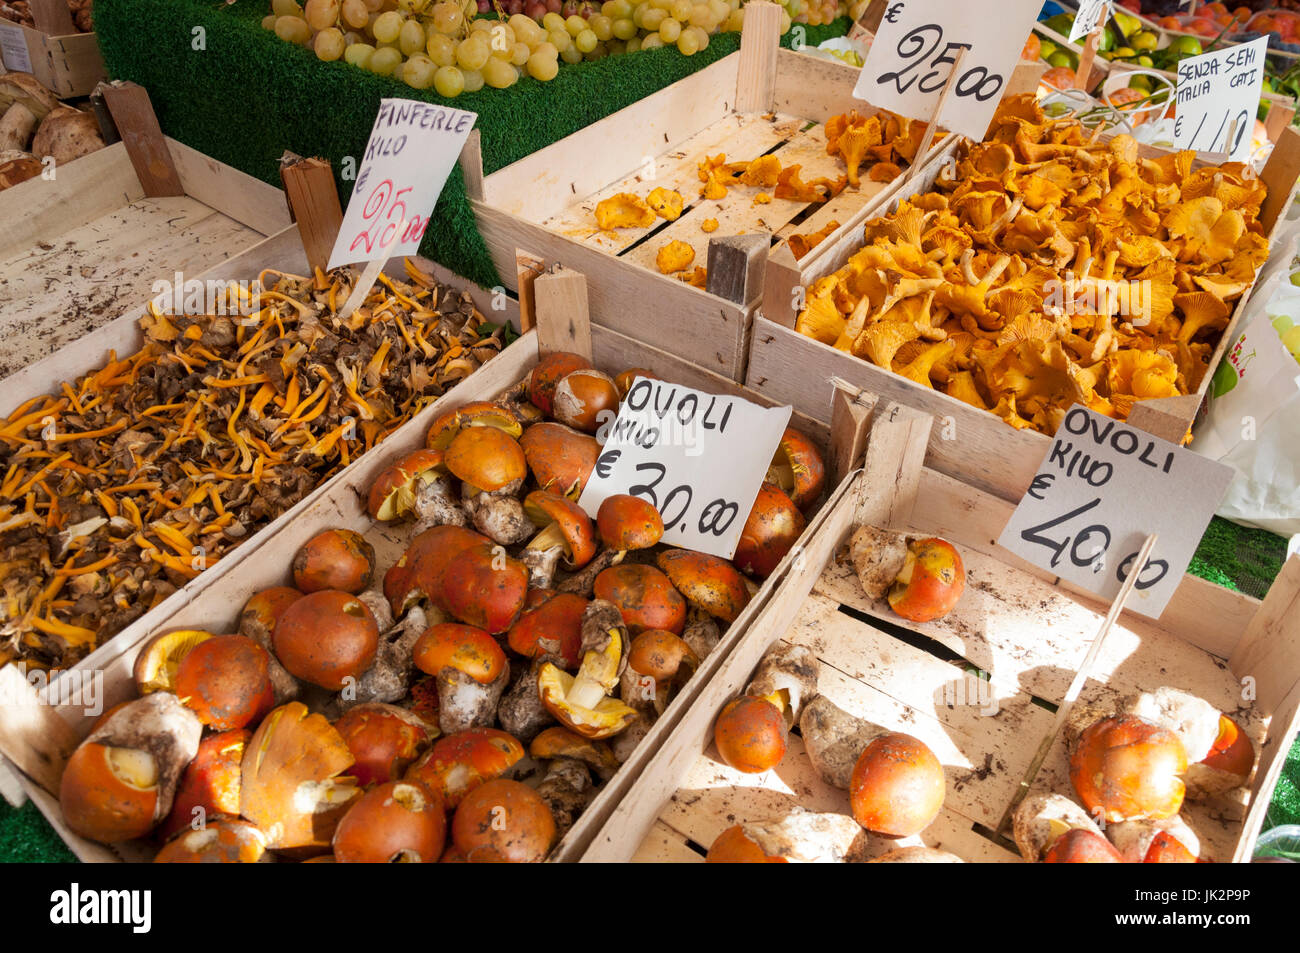 Varieties of wild mushrooms on sale at Rialto market in Venice Italy Stock Photo